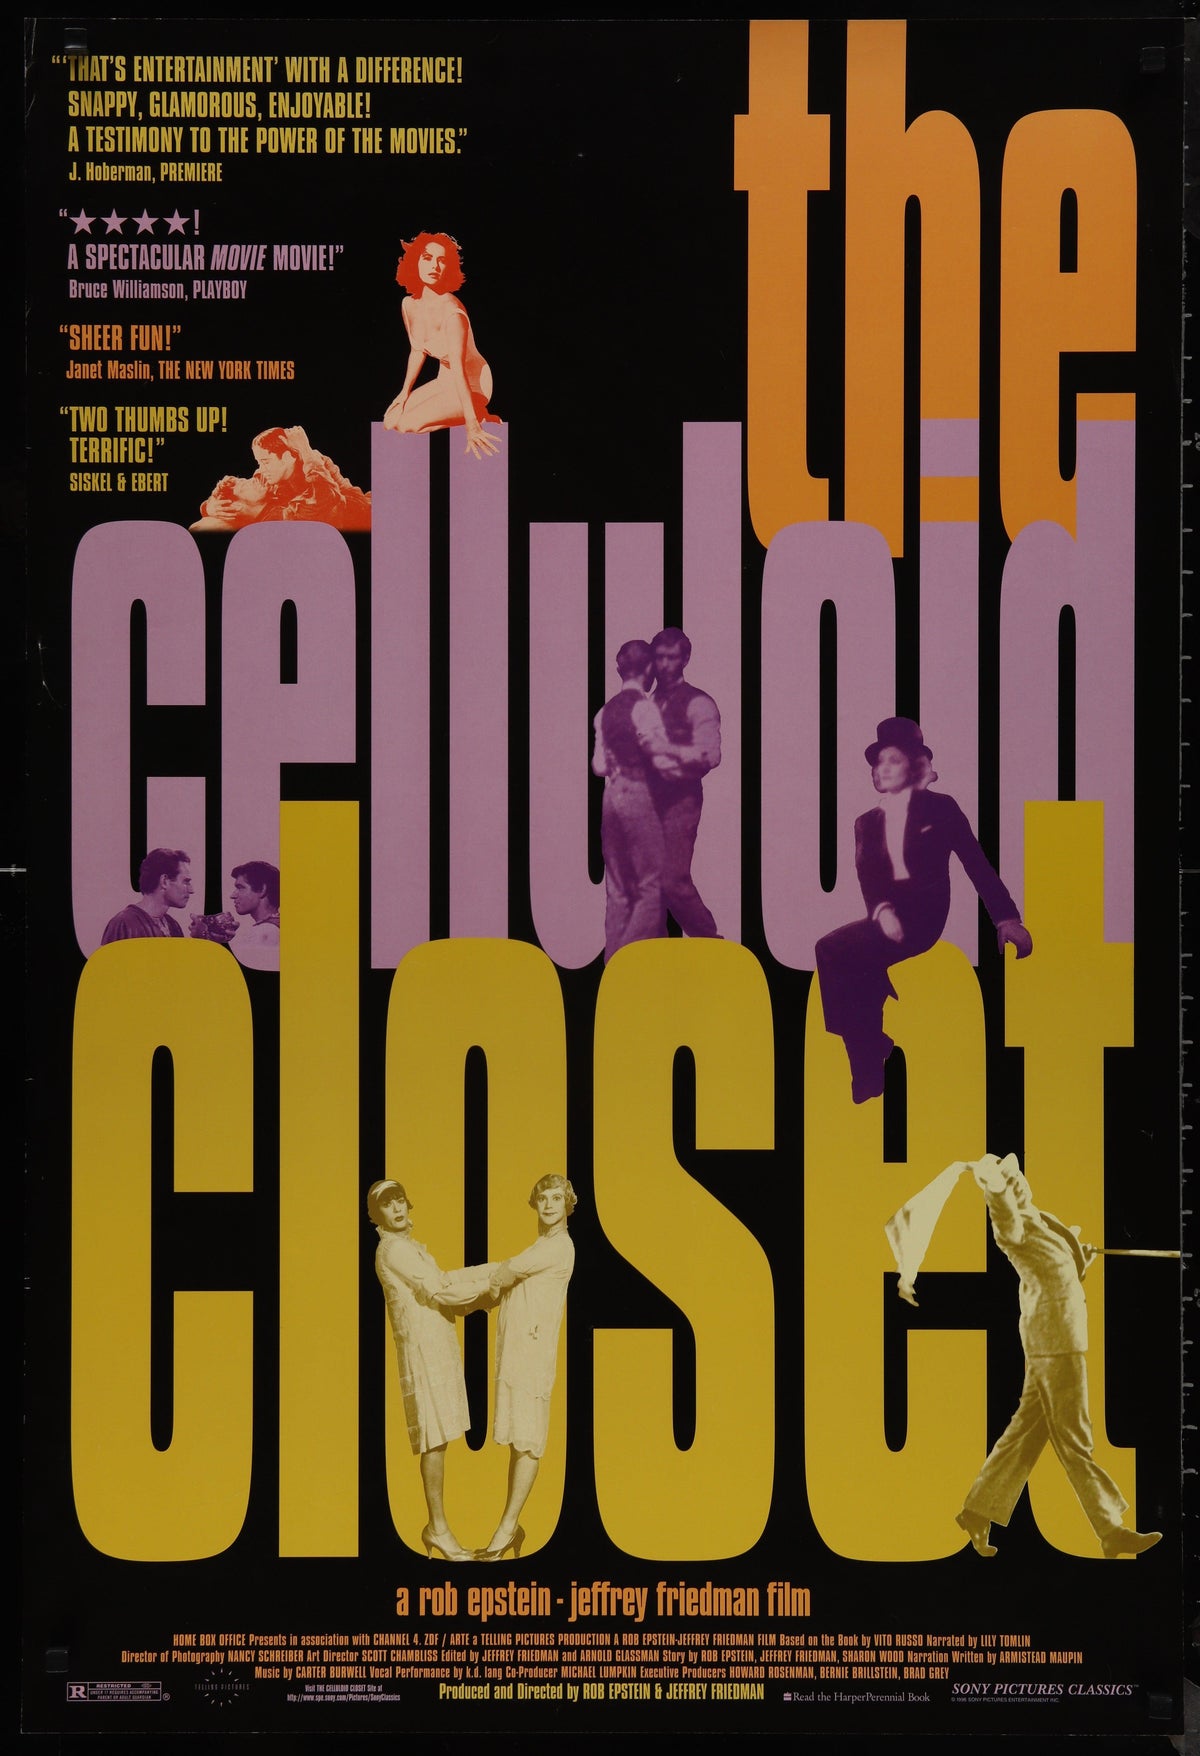 The Celluloid Closet 1 Sheet (27x41) Original Vintage Movie Poster